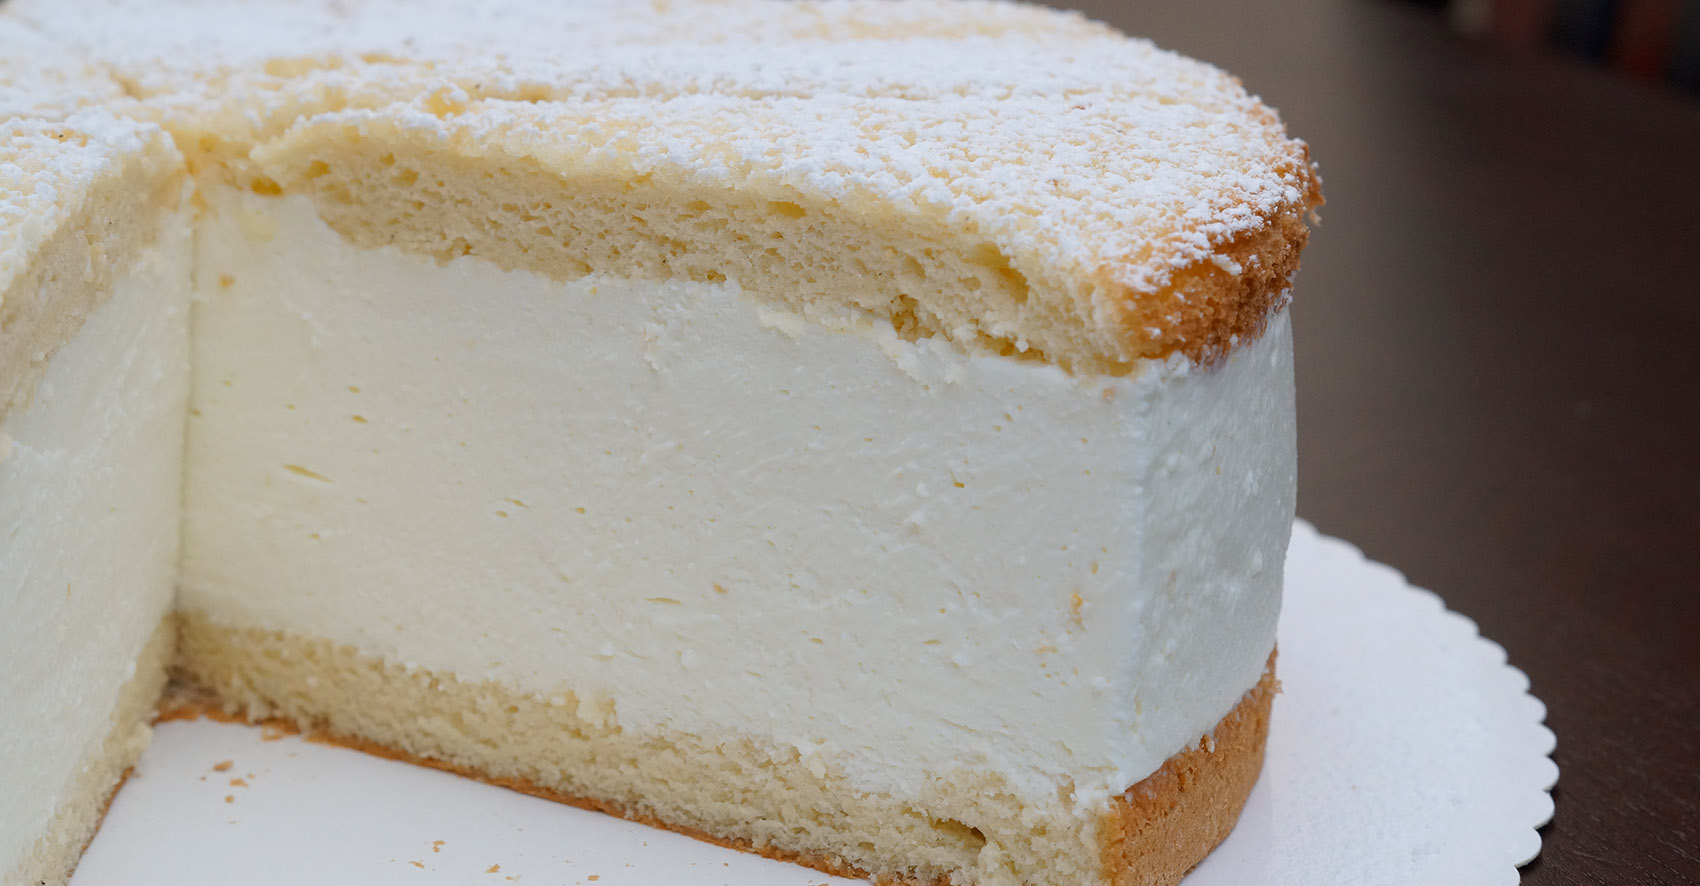 Käse-Sahne Torte